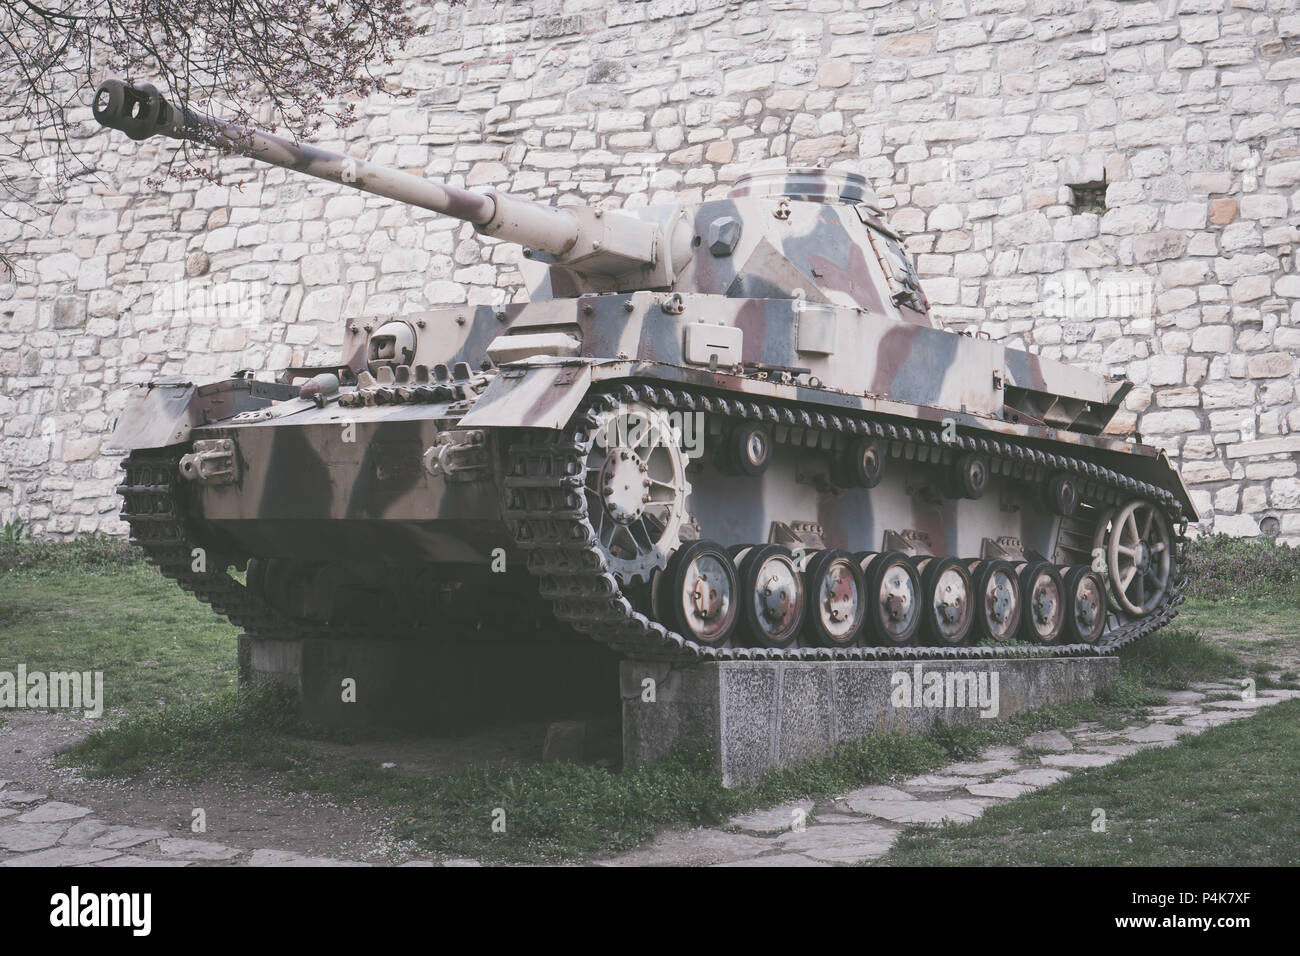 German medium tank Panzer IV or Panzerkampfwagen IV from Second World War exhibited in open space Stock Photo